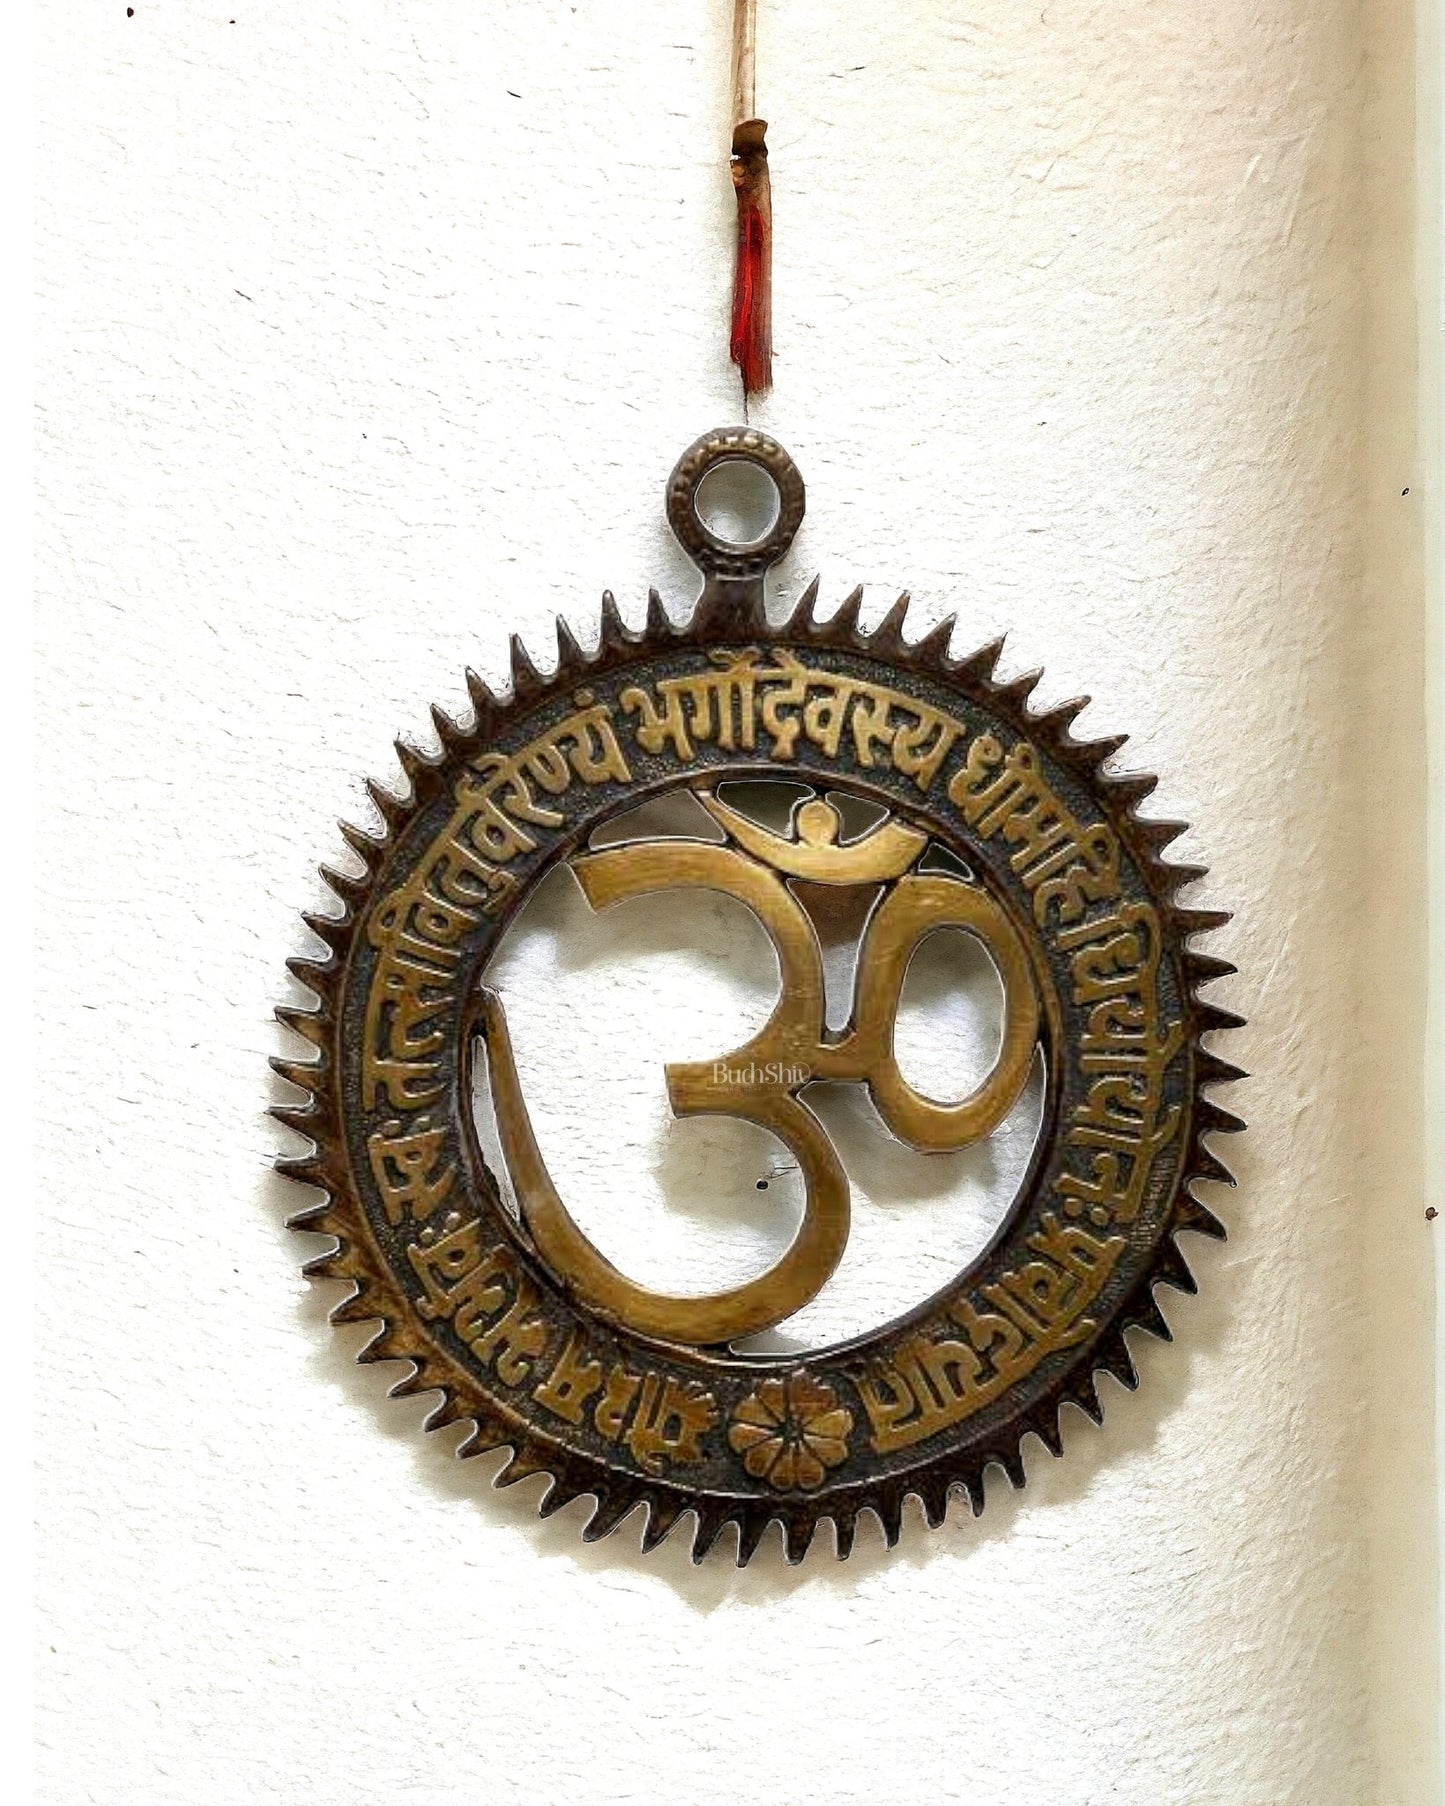 Brass om with Gayatri mantra engraved wall hanging 6 inch - Budhshiv.com